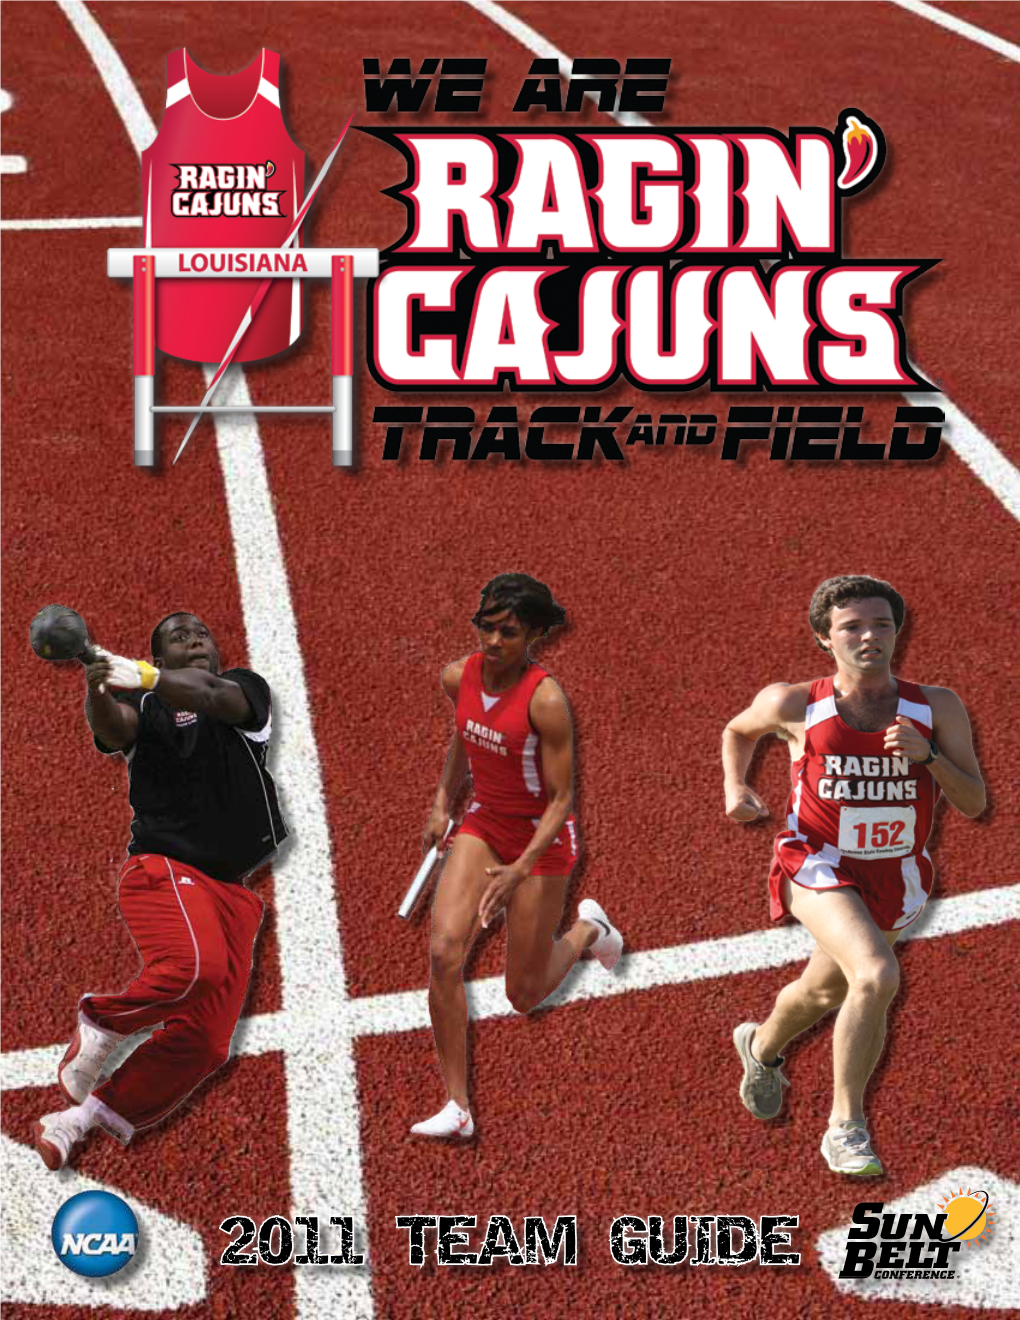 2011 TEAM GUIDE 2011 Louisiana’S Ragin Cajuns Track & Field 2009-10 SBC CHAMPIONS